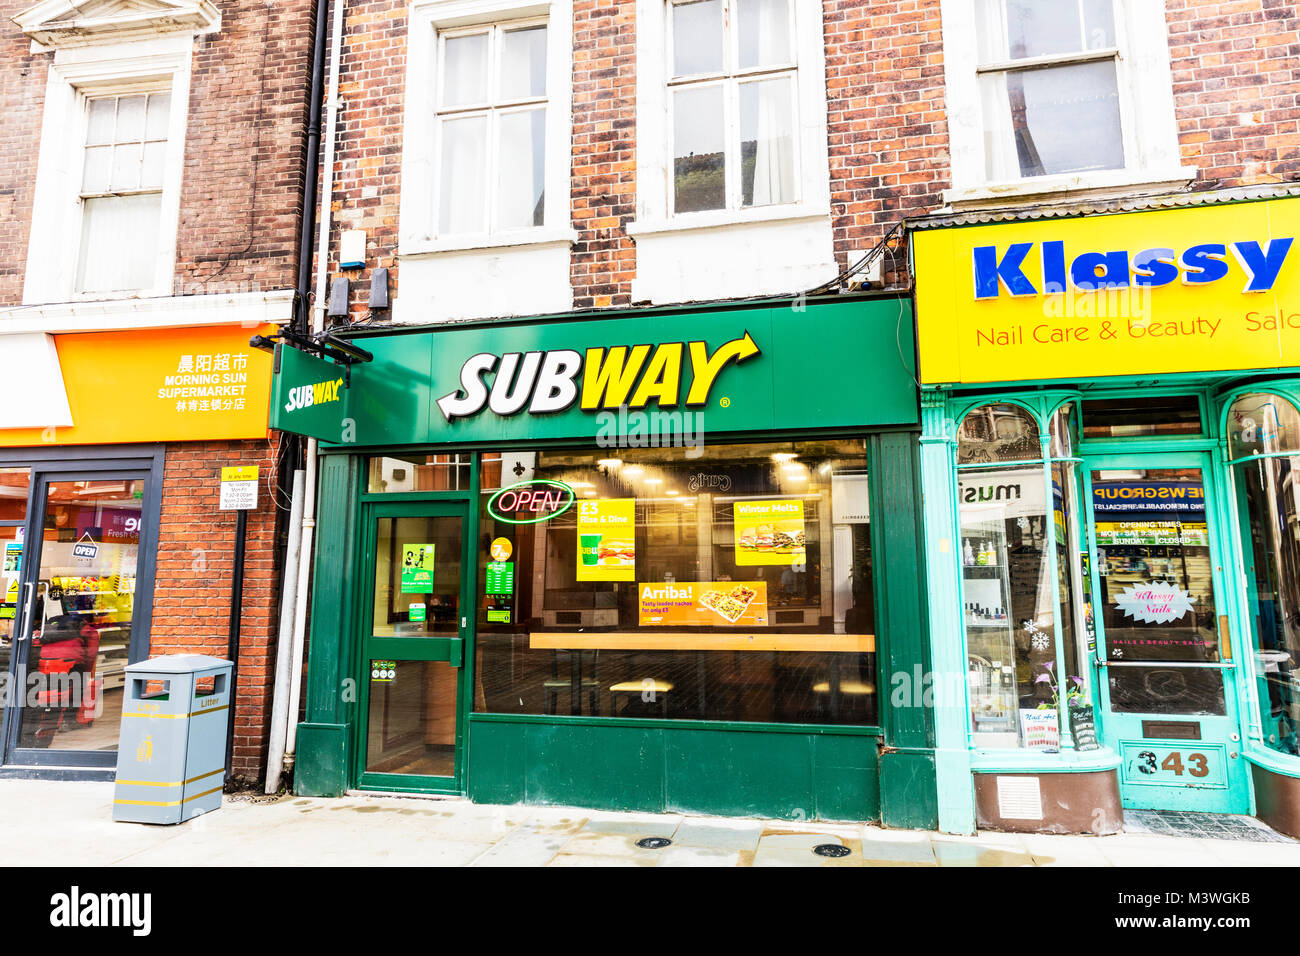 Subway, Subway shop UK England, Subway food outlet, Subway sign, Subway  fast food restaurant franchise, Subway restaurant, Subway fast food shop, UK Stock Photo